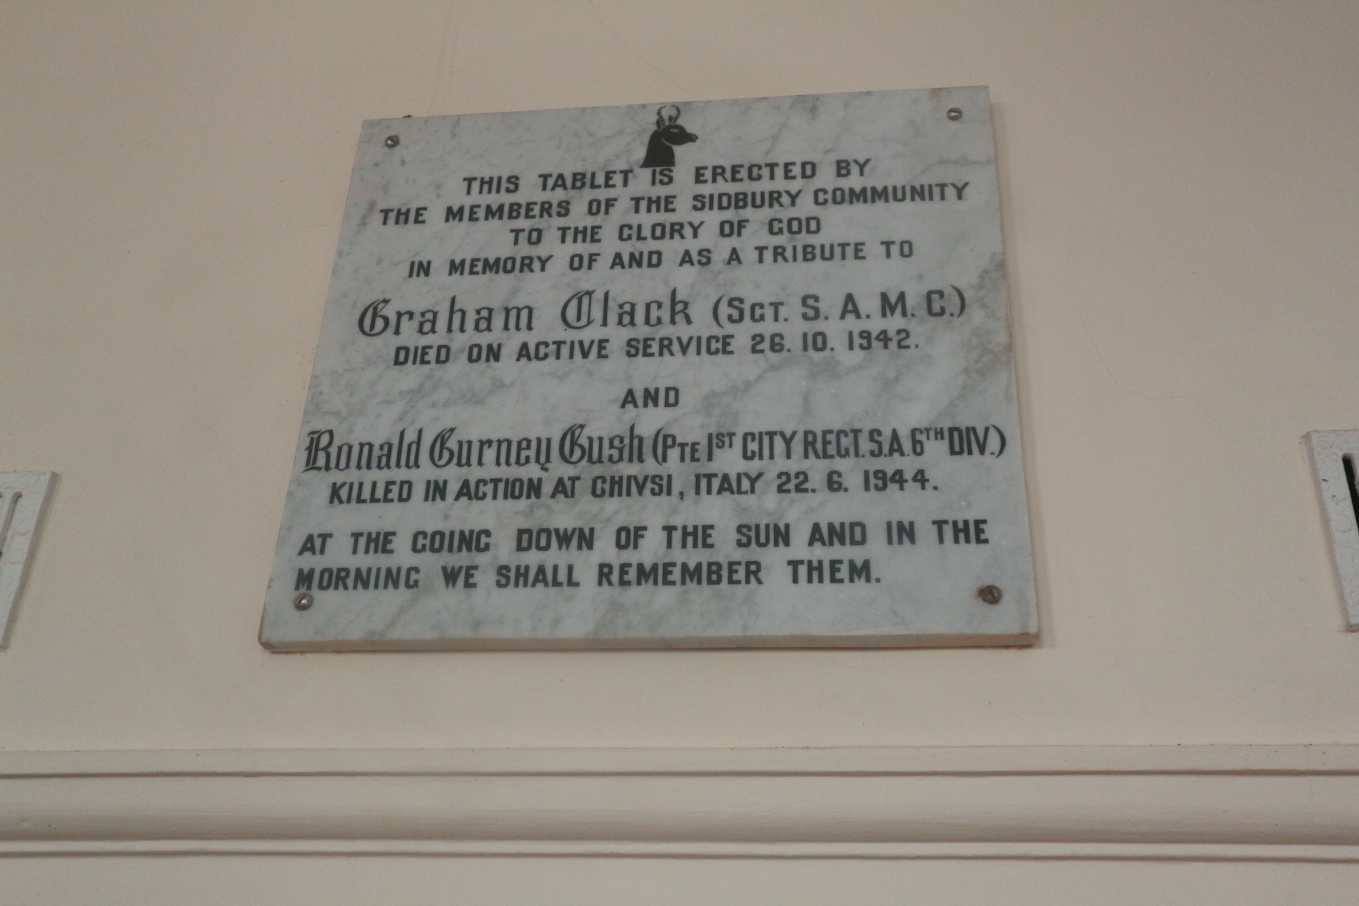 CLACK Graham -1942 :: GUSH Ronald Gurney -1944